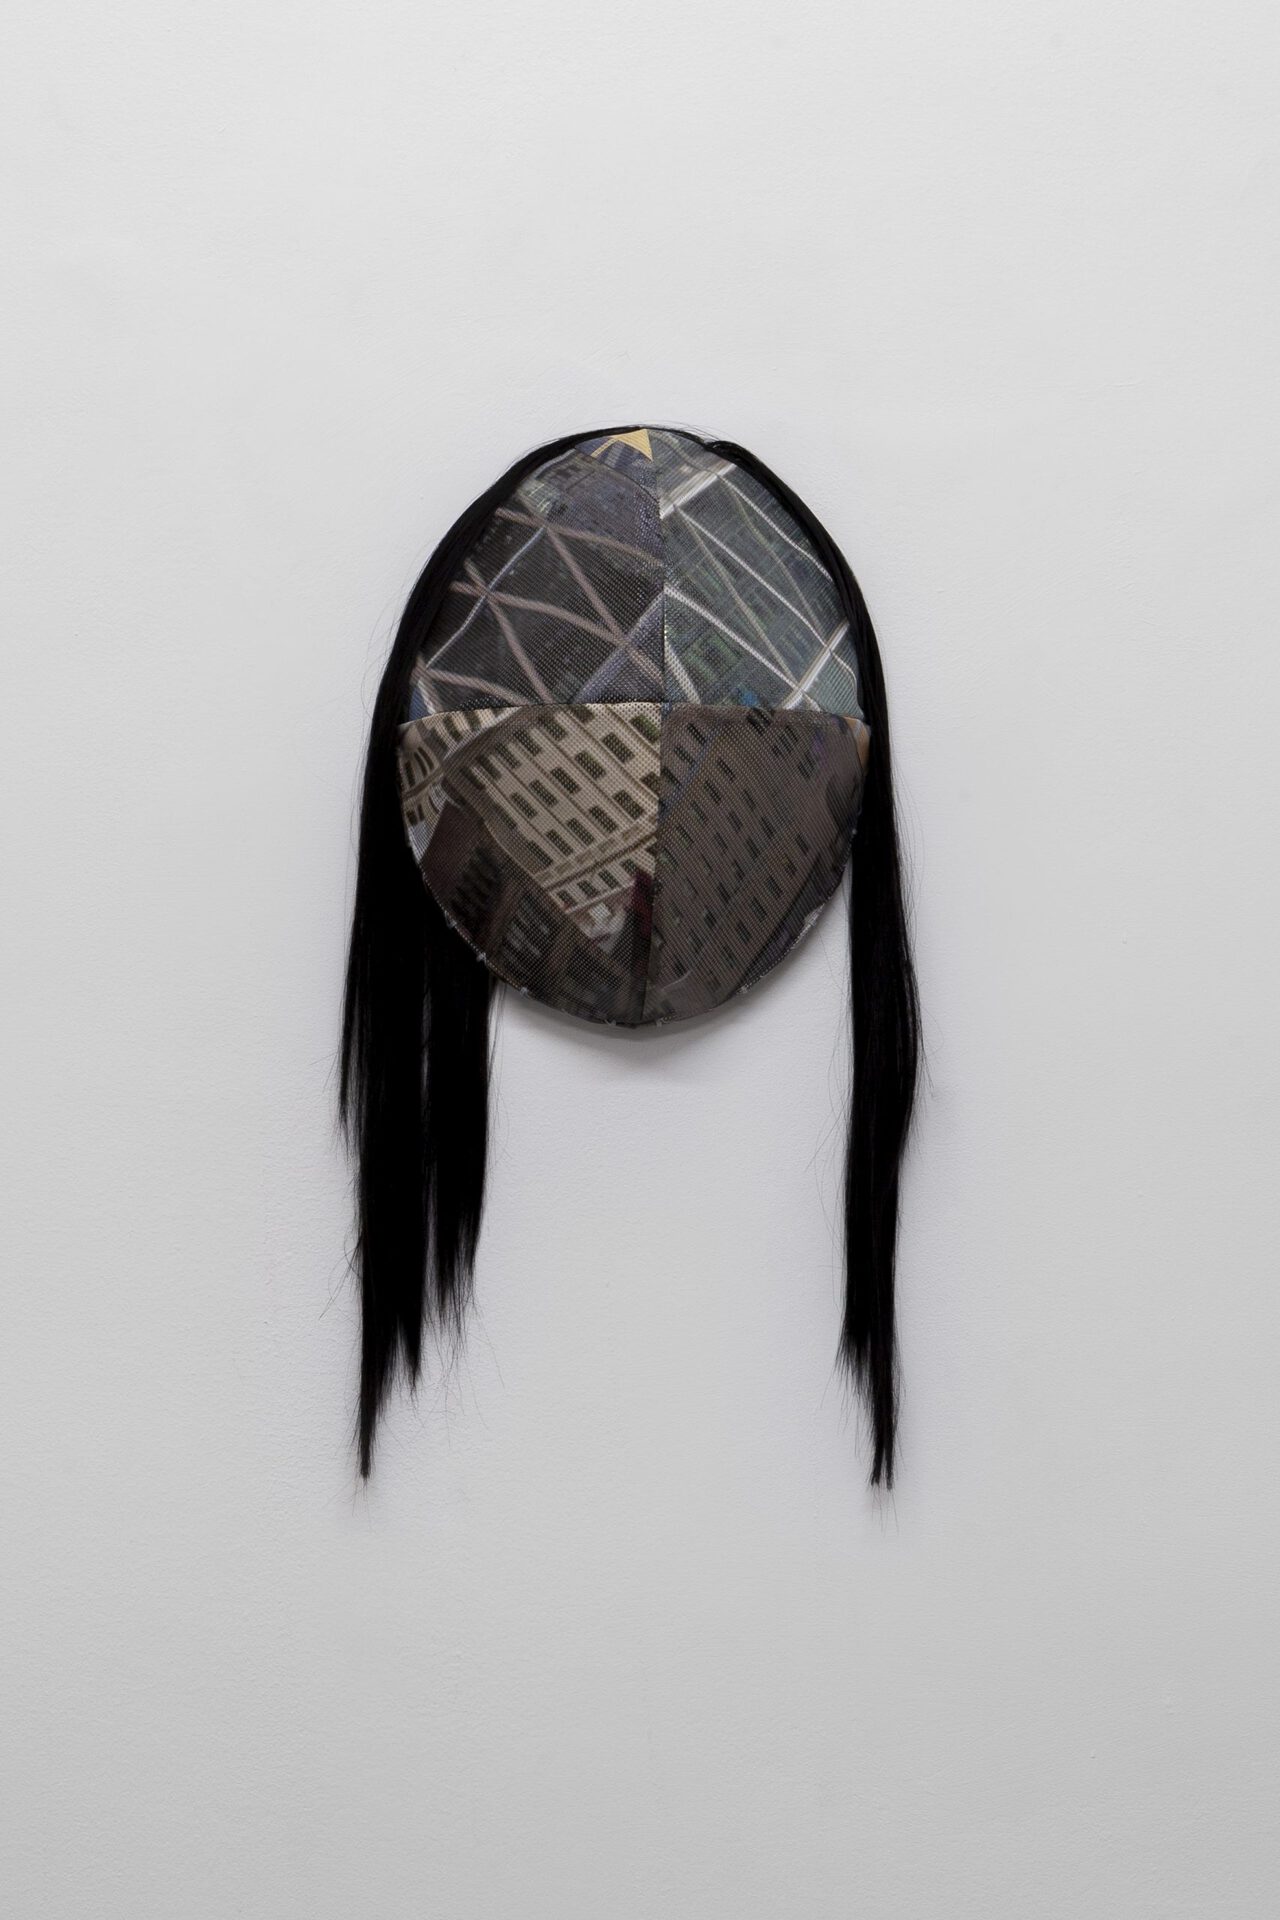 Jasmin Werner, Façadomy (Hearst Tower, New York ), 2020, printed mesh fencing, aluminium, zip ties, thread, synthetic hair, 32cm x 20cm x 58cm